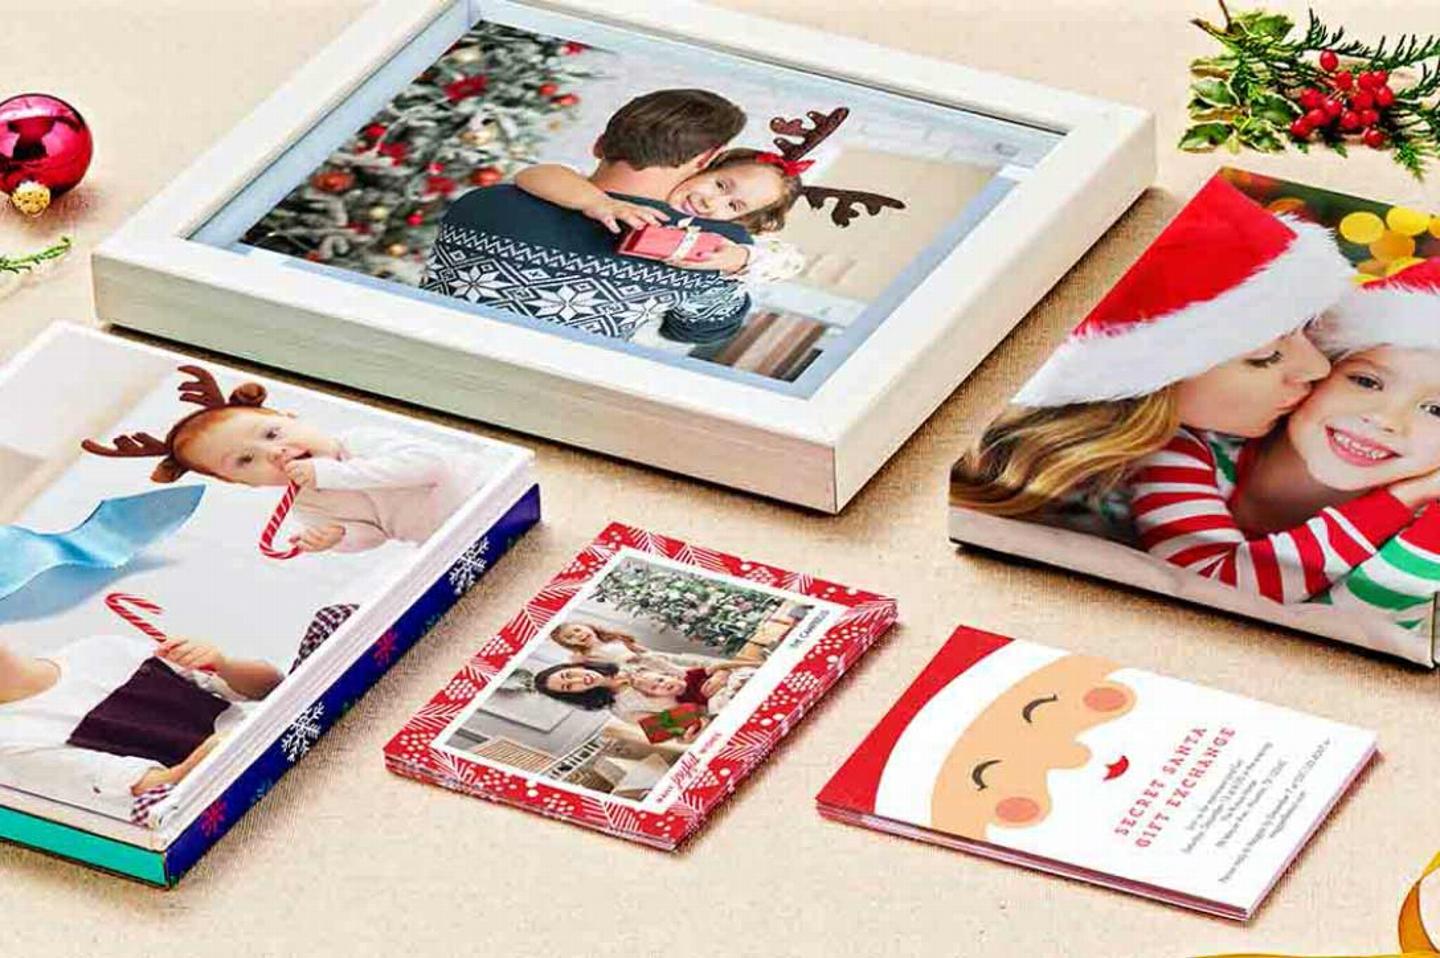 7 holiday photo gifts you can get at Walgreens today Walgreens Newsroom